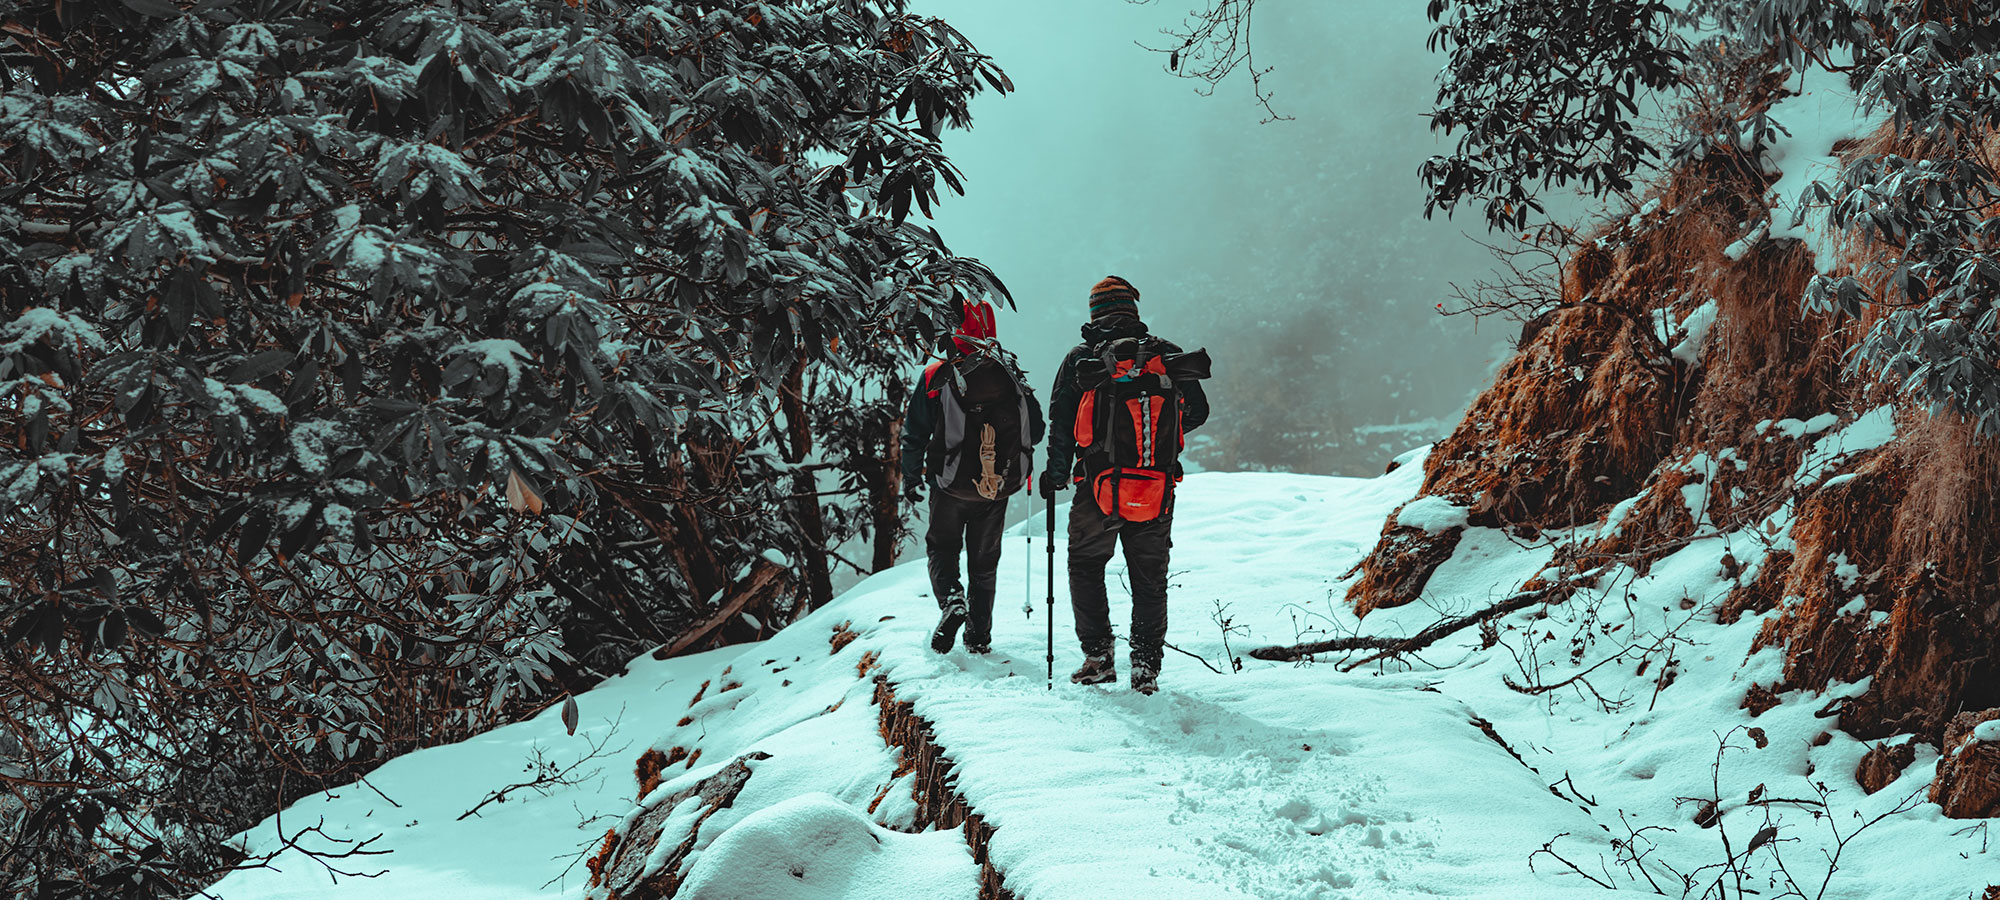 coppia a piedi trekking neve bosco